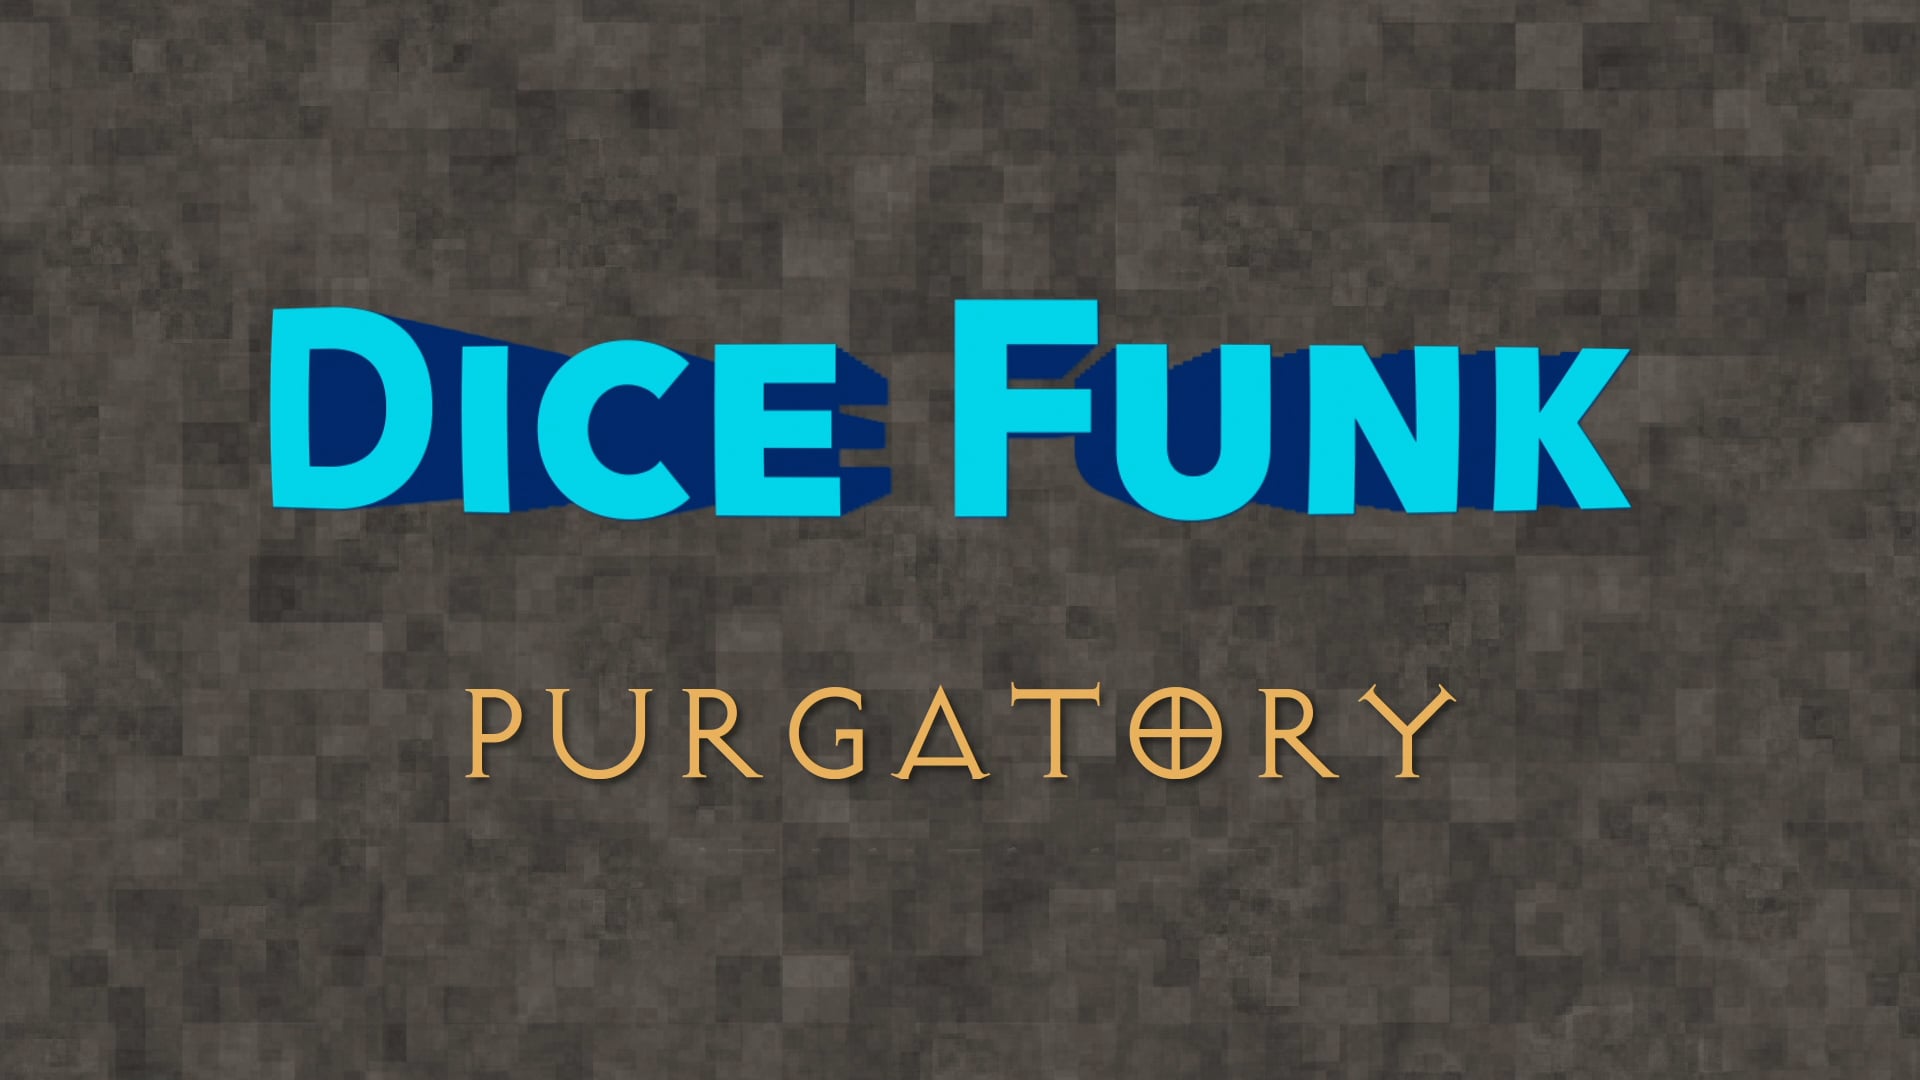 Dice Funk Purgatory